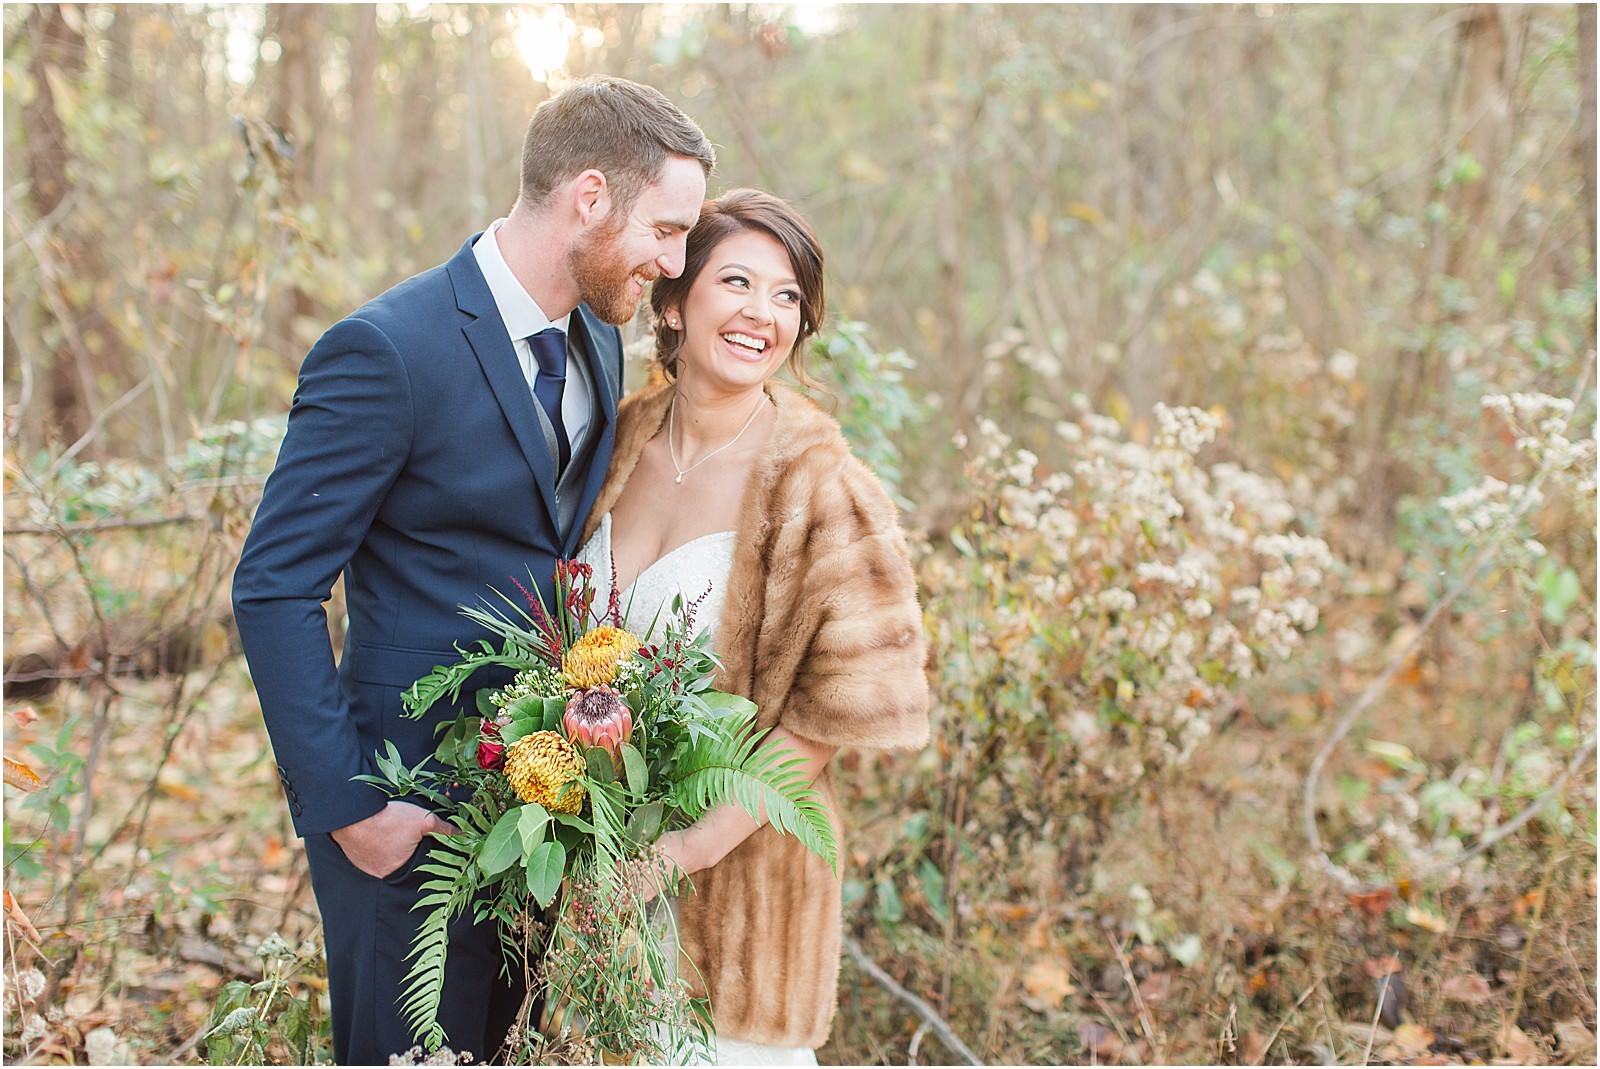 Walker and Alyssa's intimate fall wedding in Southern Indiana. | Wedding Photography | The Corner House Wedding | Southern Indiana Wedding | #fallwedding #intimatewedding | 079.jpg